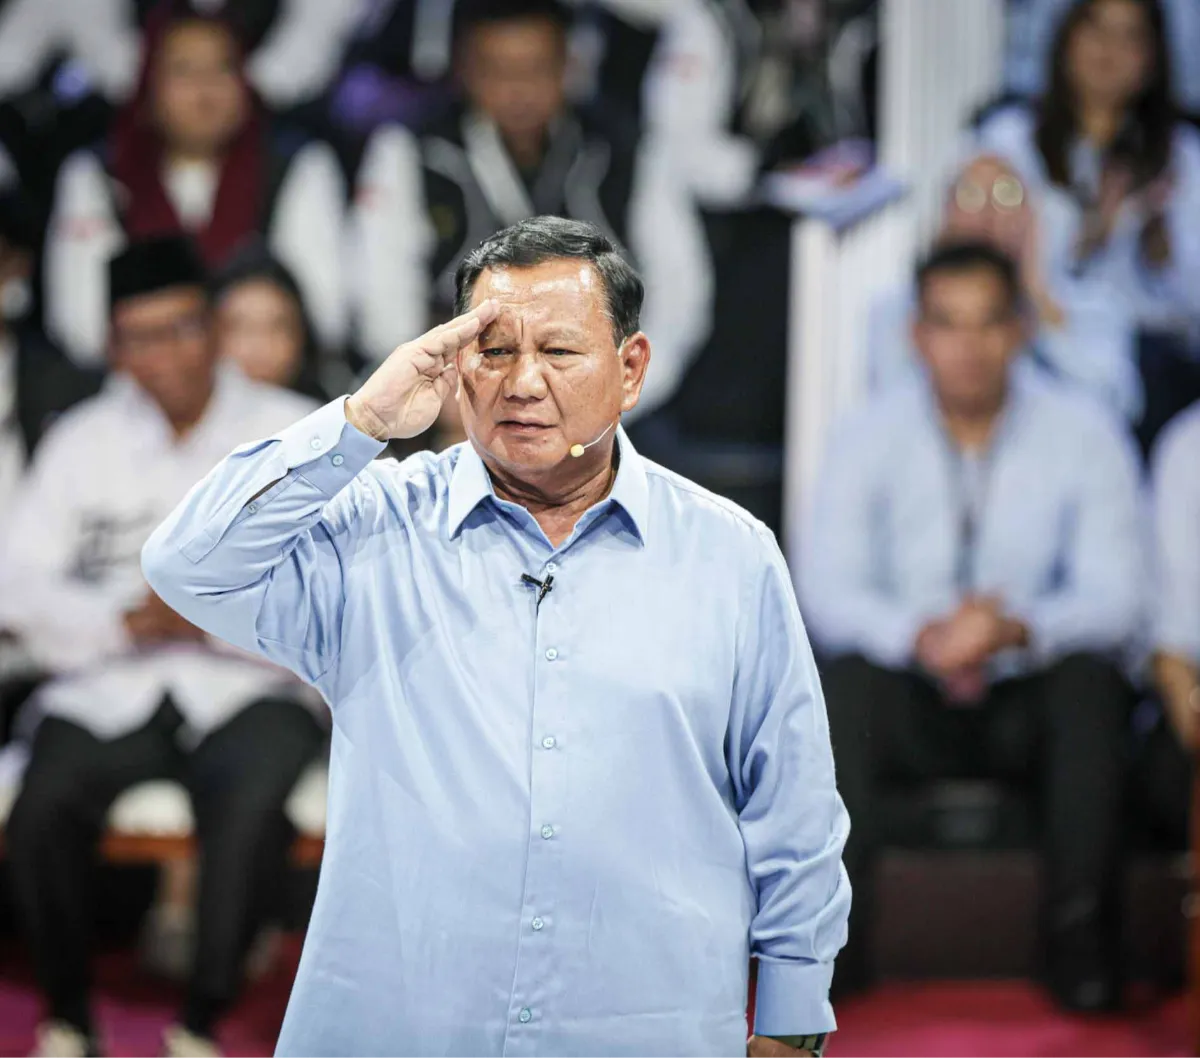 Calon Presiden nomor urut 2, Prabowo Subianto, menanggapi pernyataan yang dilontarkan oleh calon Presiden nomor urut 1, Anies Baswedan, terkait ( Sumber foto: Merdeka.com)